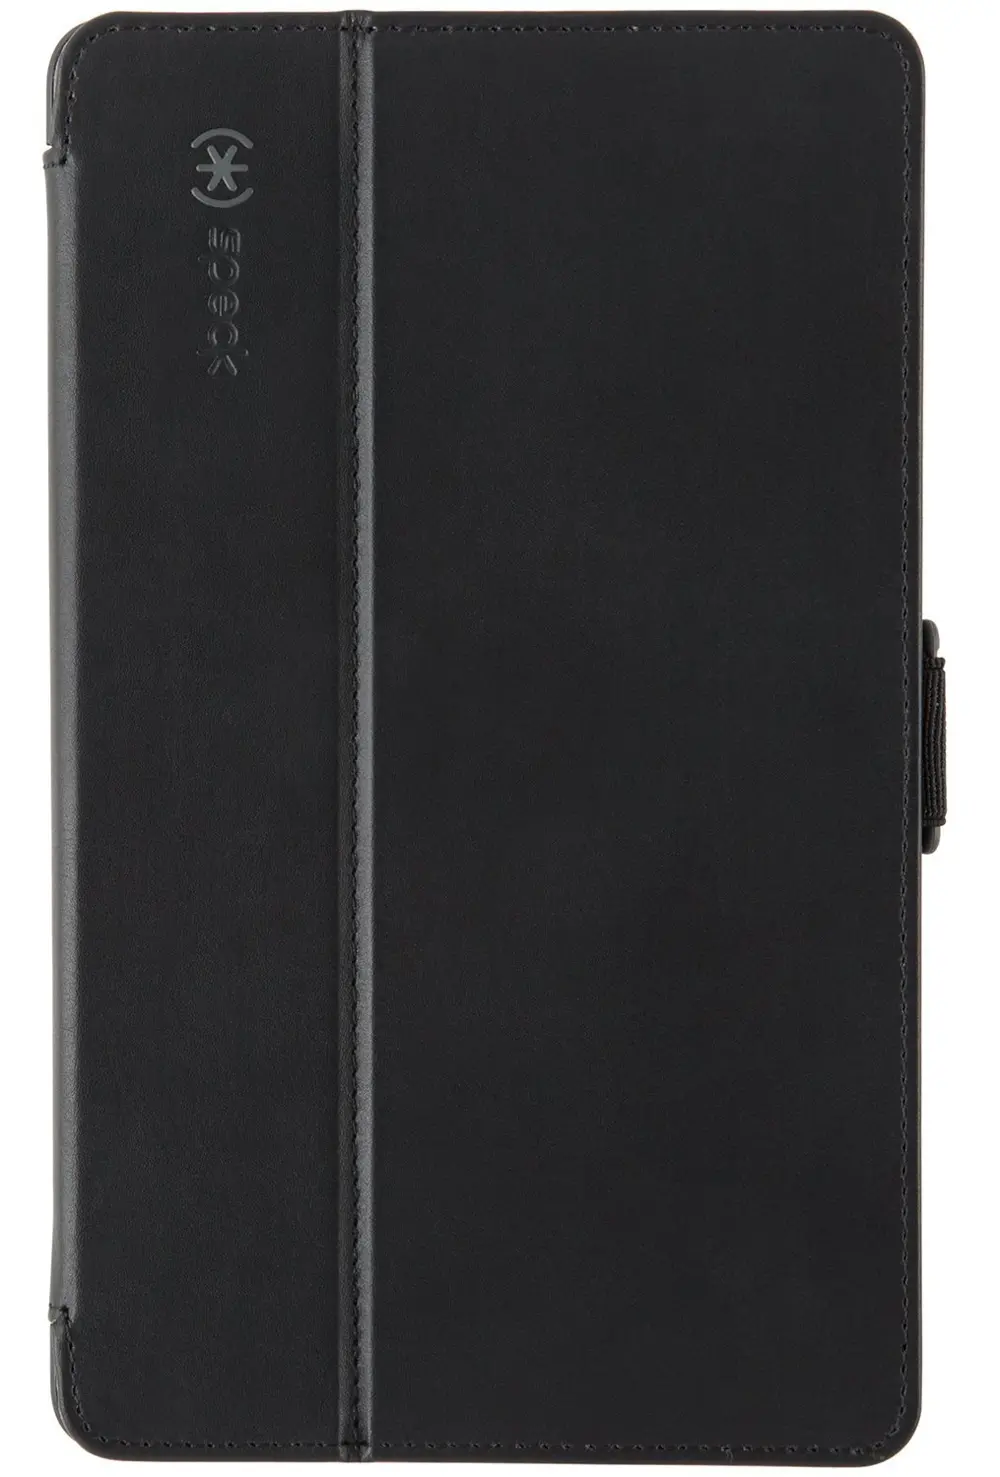 Speck StyleFolio Flip Case for Samsung Galaxy Tab S 8.4 Inch - Gray-1